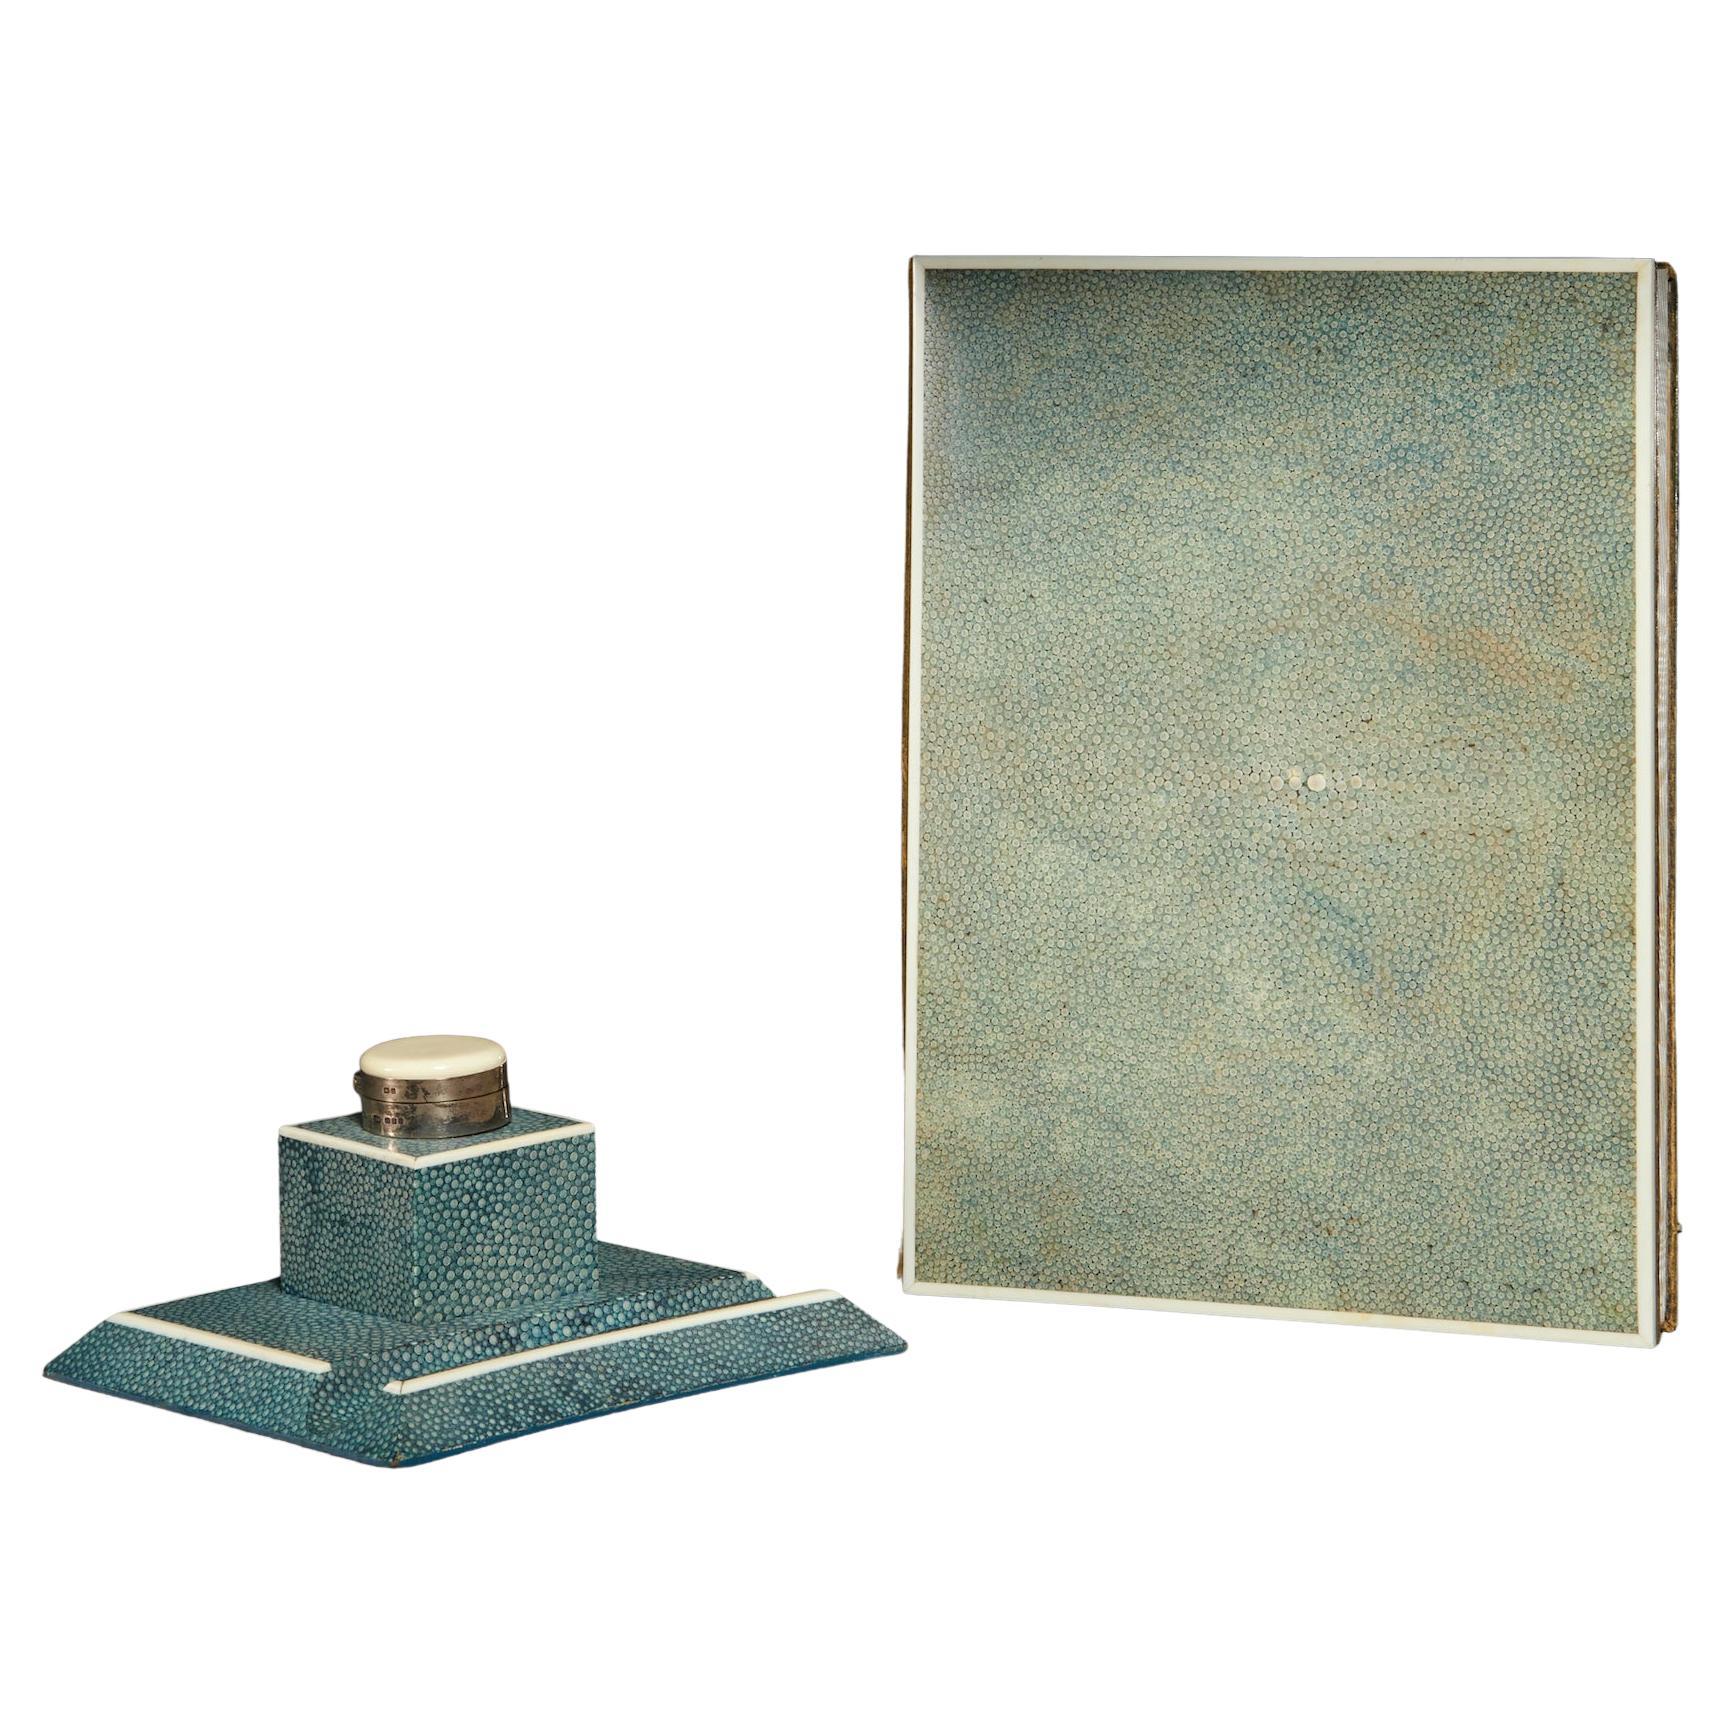 English Art Deco Period Blue Shagreen Desk Set of a Folder and Inkwell